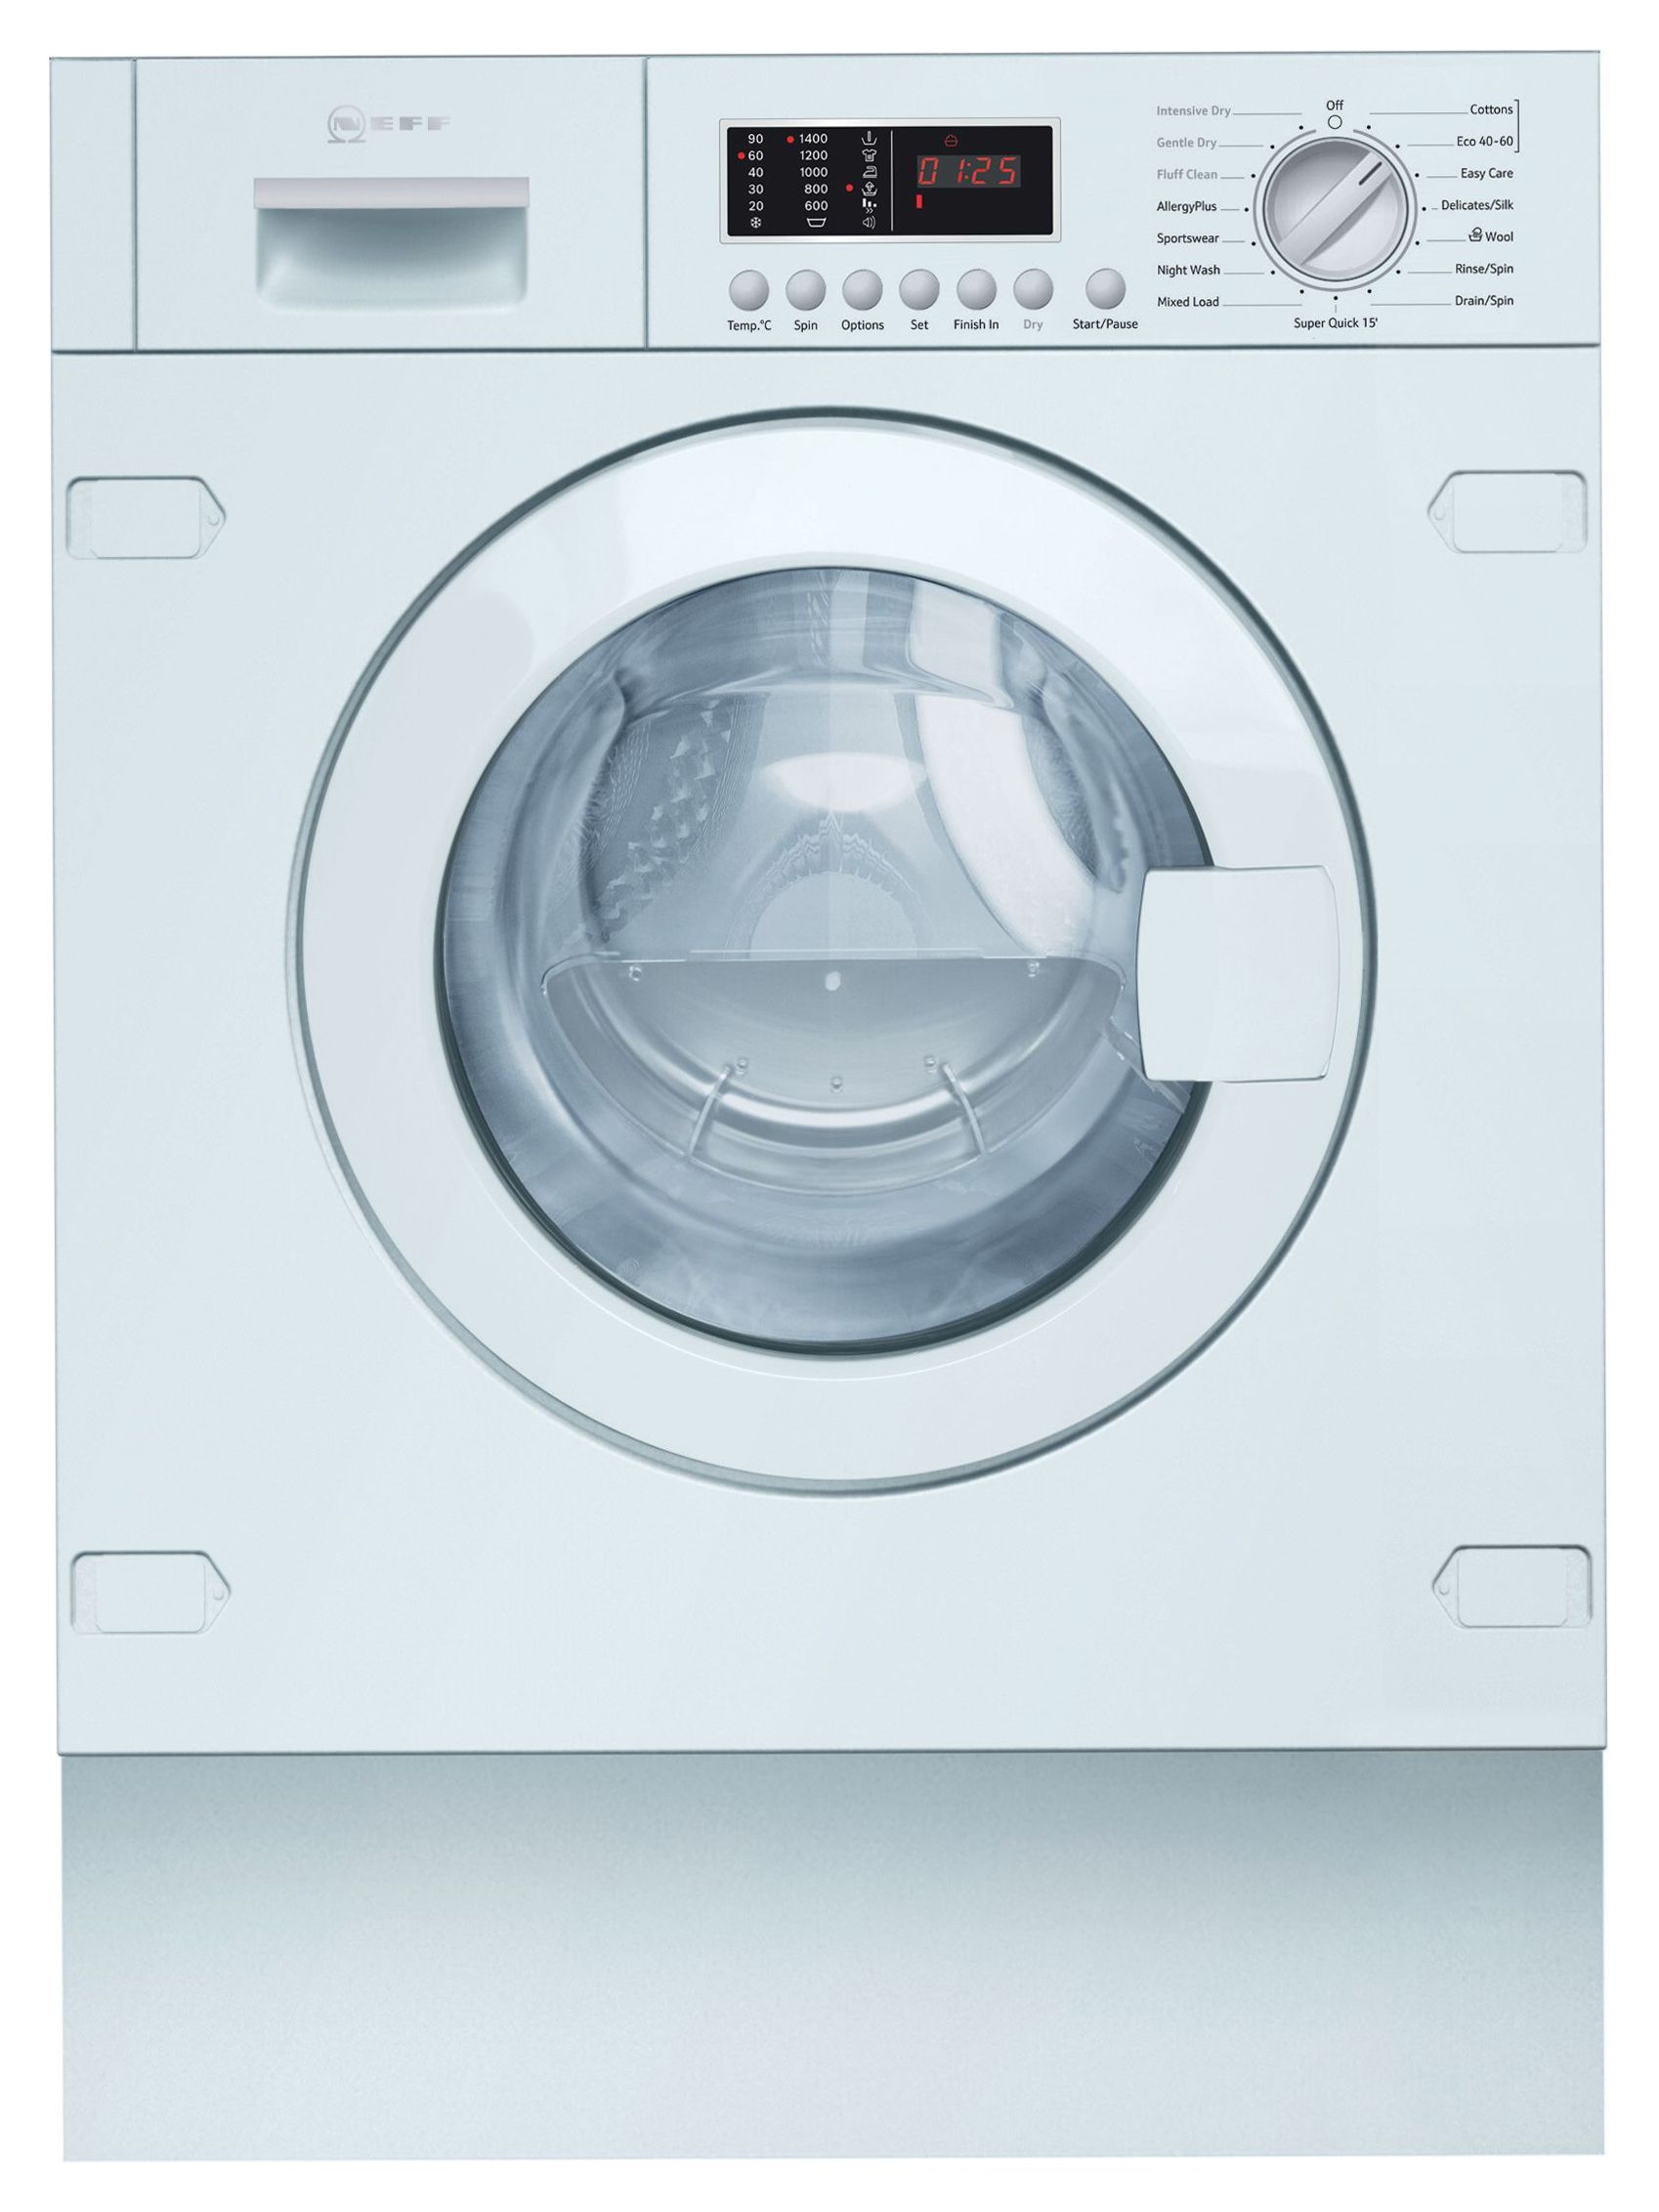 Image of NEFF V6540X2GB 7kg Integrated Washer Dryer - White